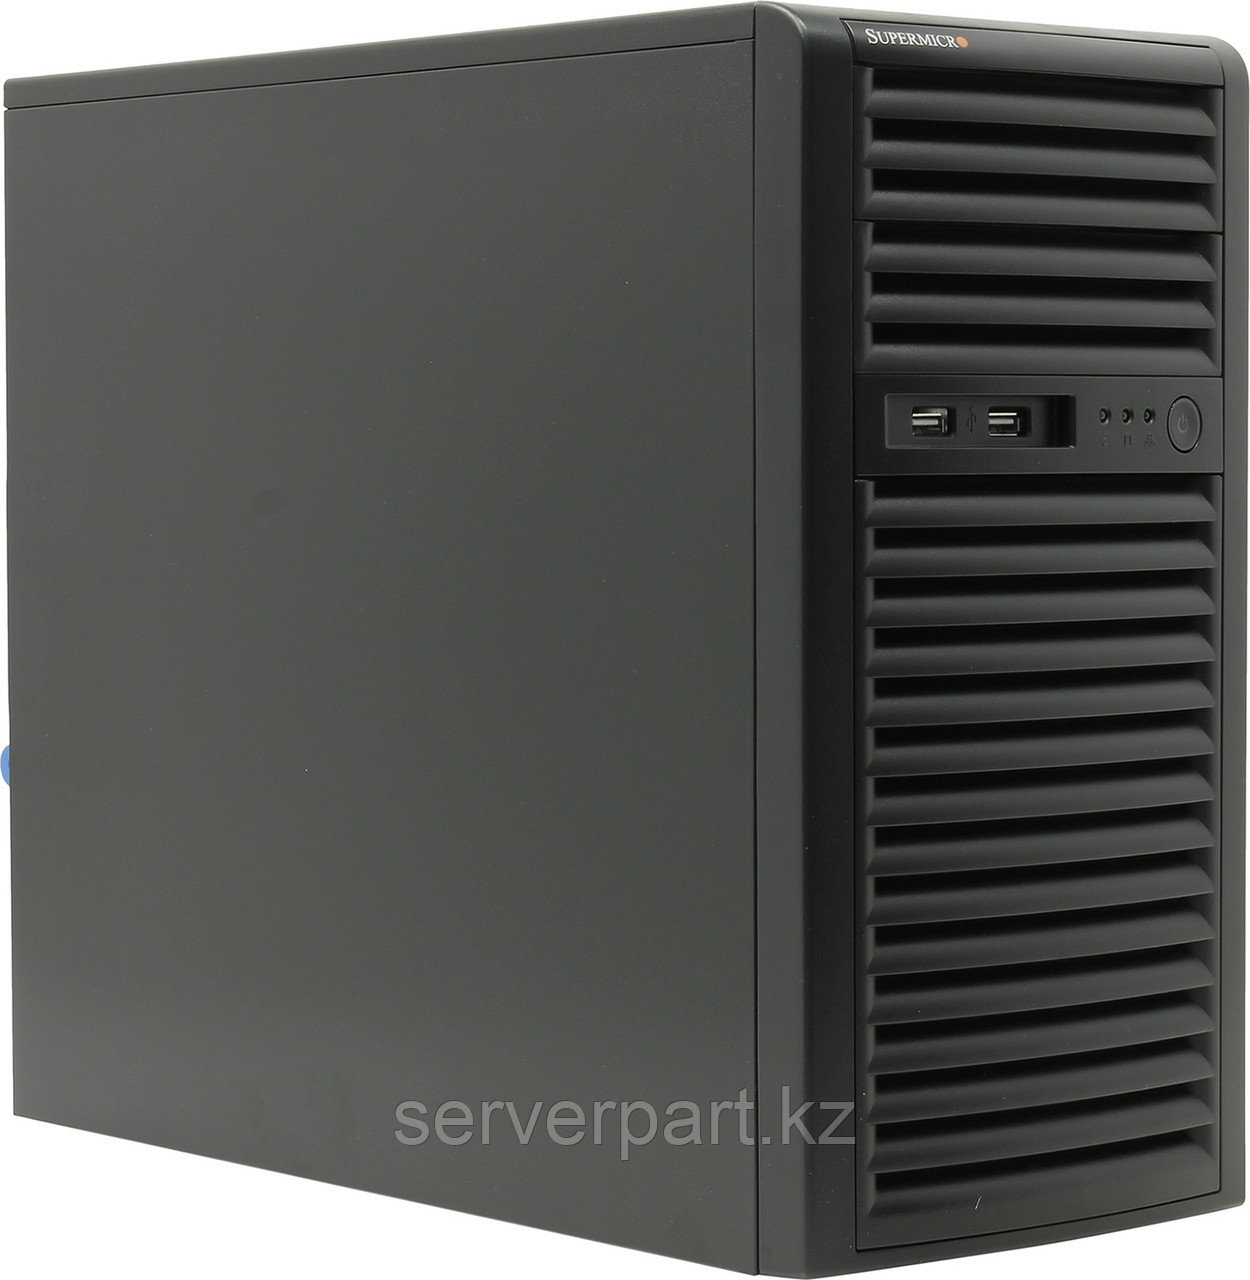 Сервер Supermicro SYS-5039D Tower/4-core intel xeon E3-1220v6 3GHz/32GB UDIMM nECC/1x240GB SSD MU Hyb